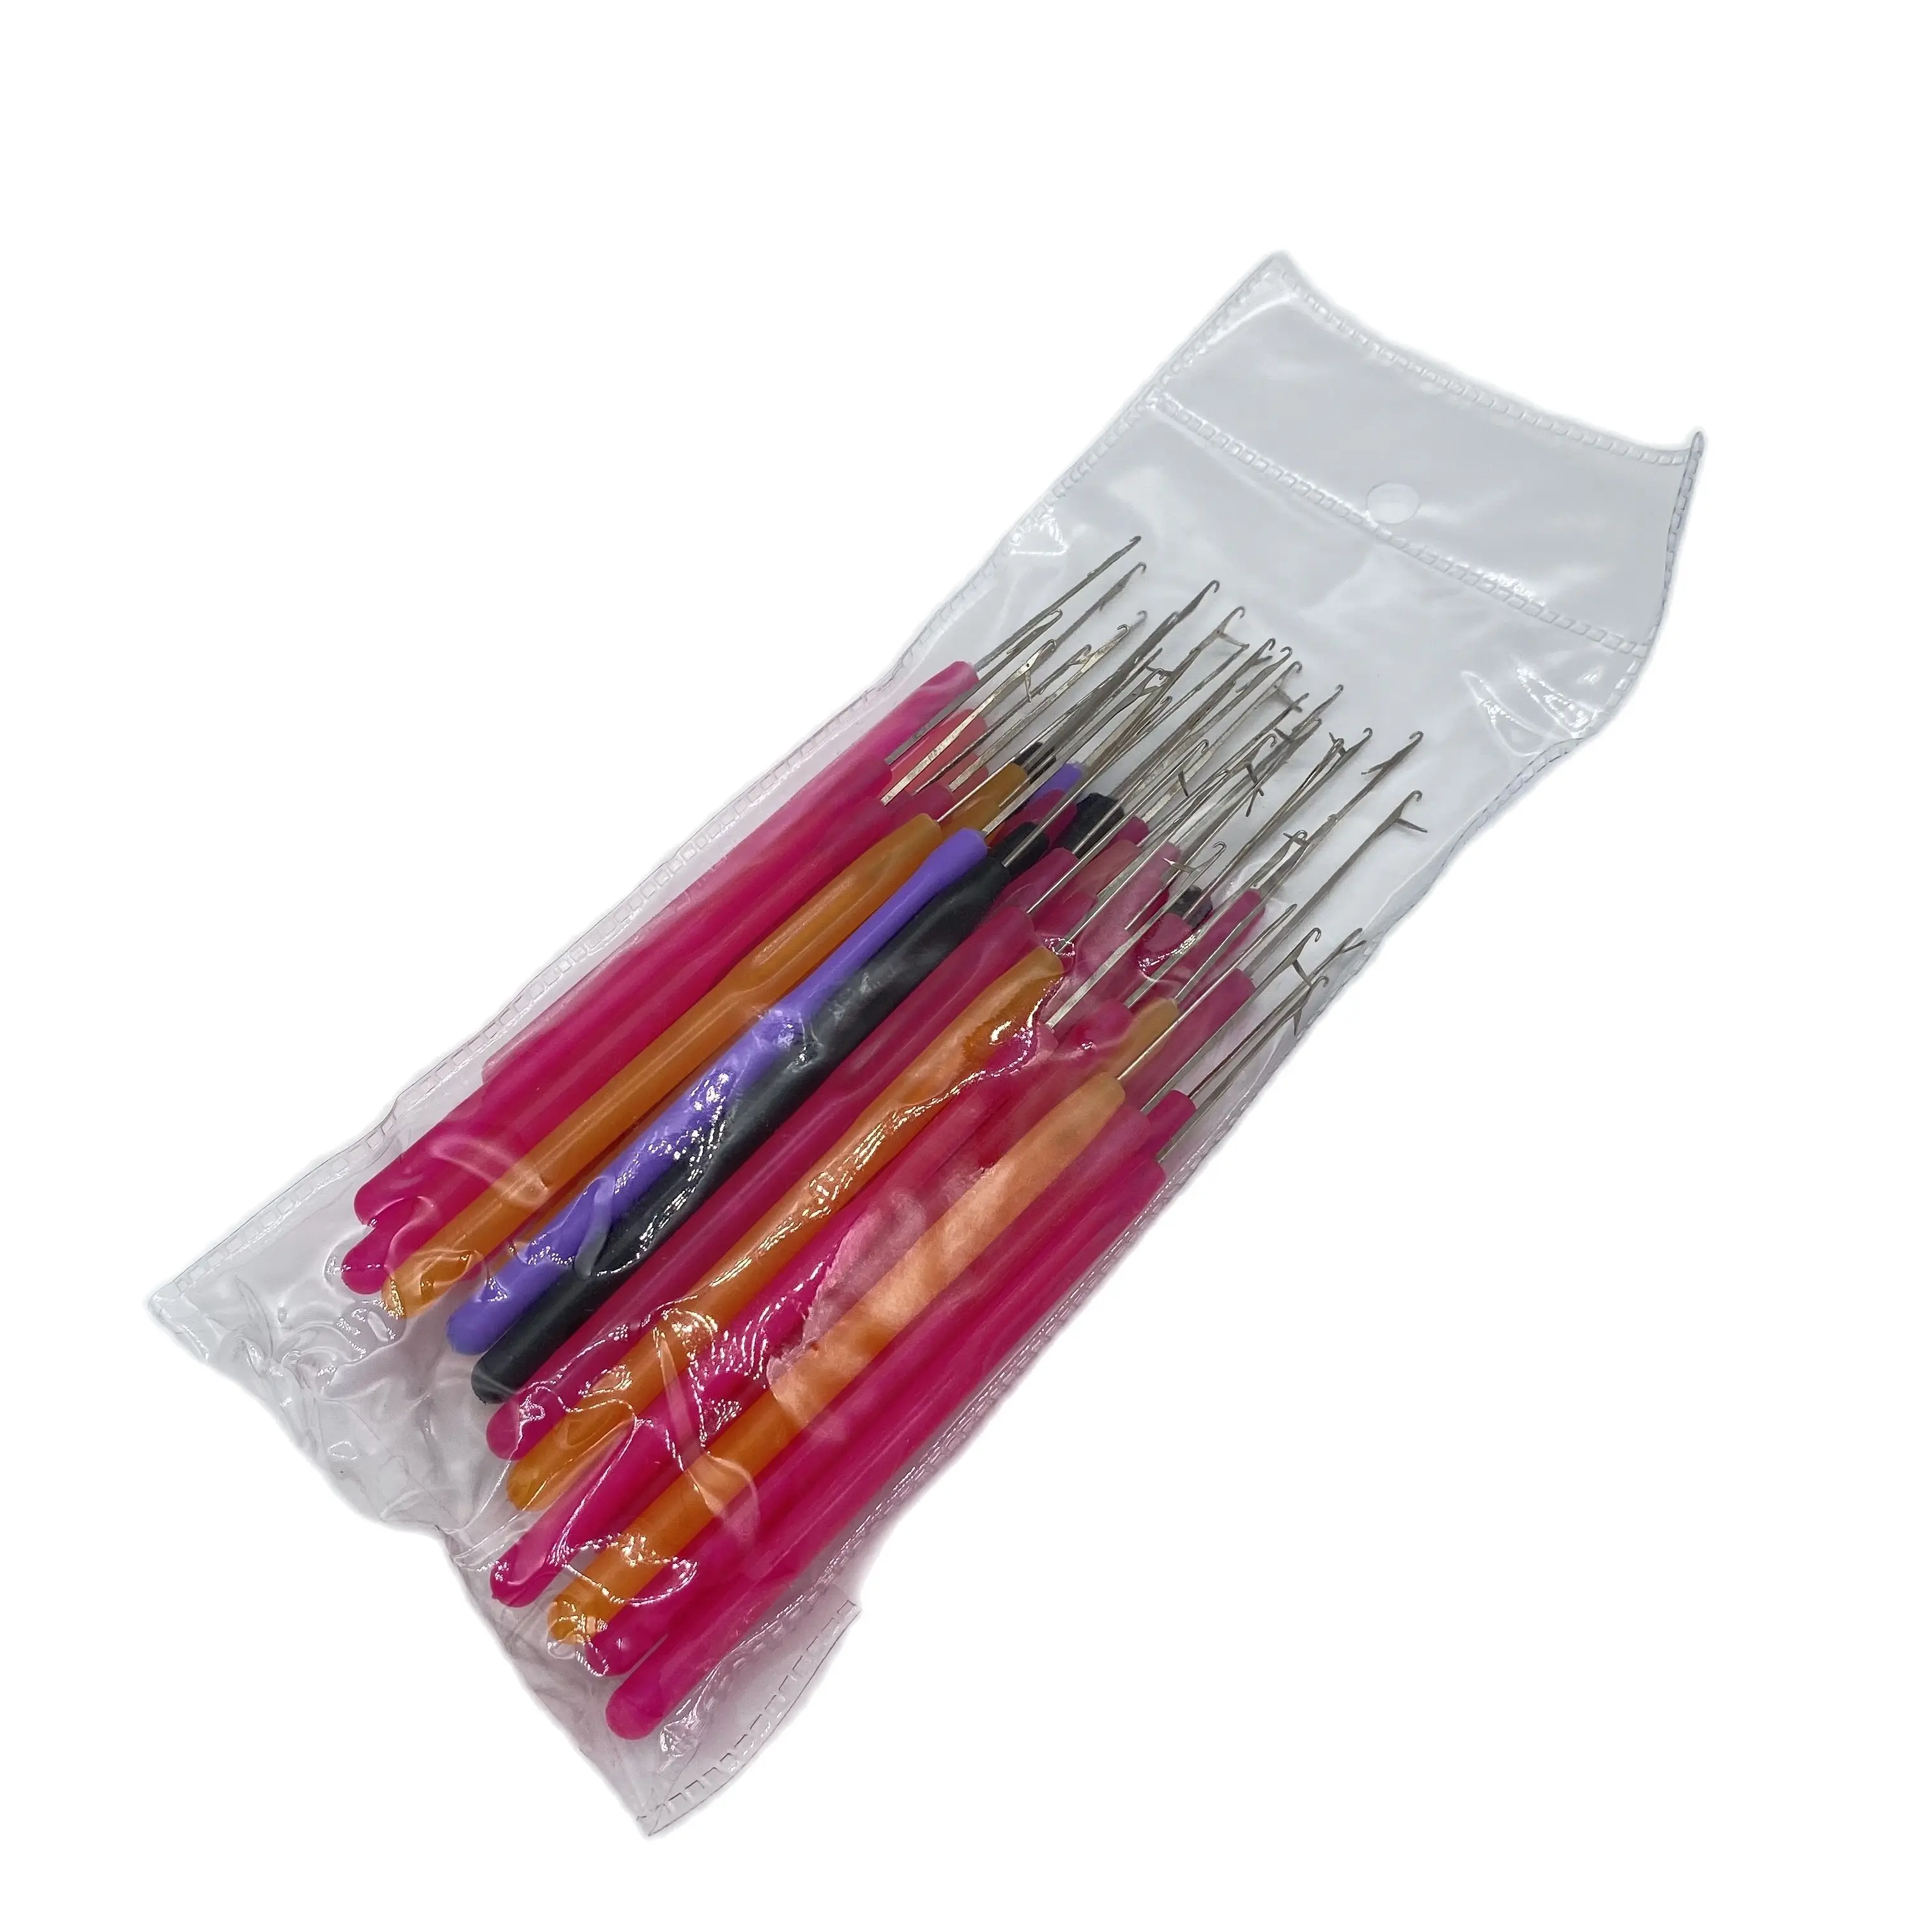 6pcs/Set Crochet Hook Knitting Needles colorful Plastic Handle